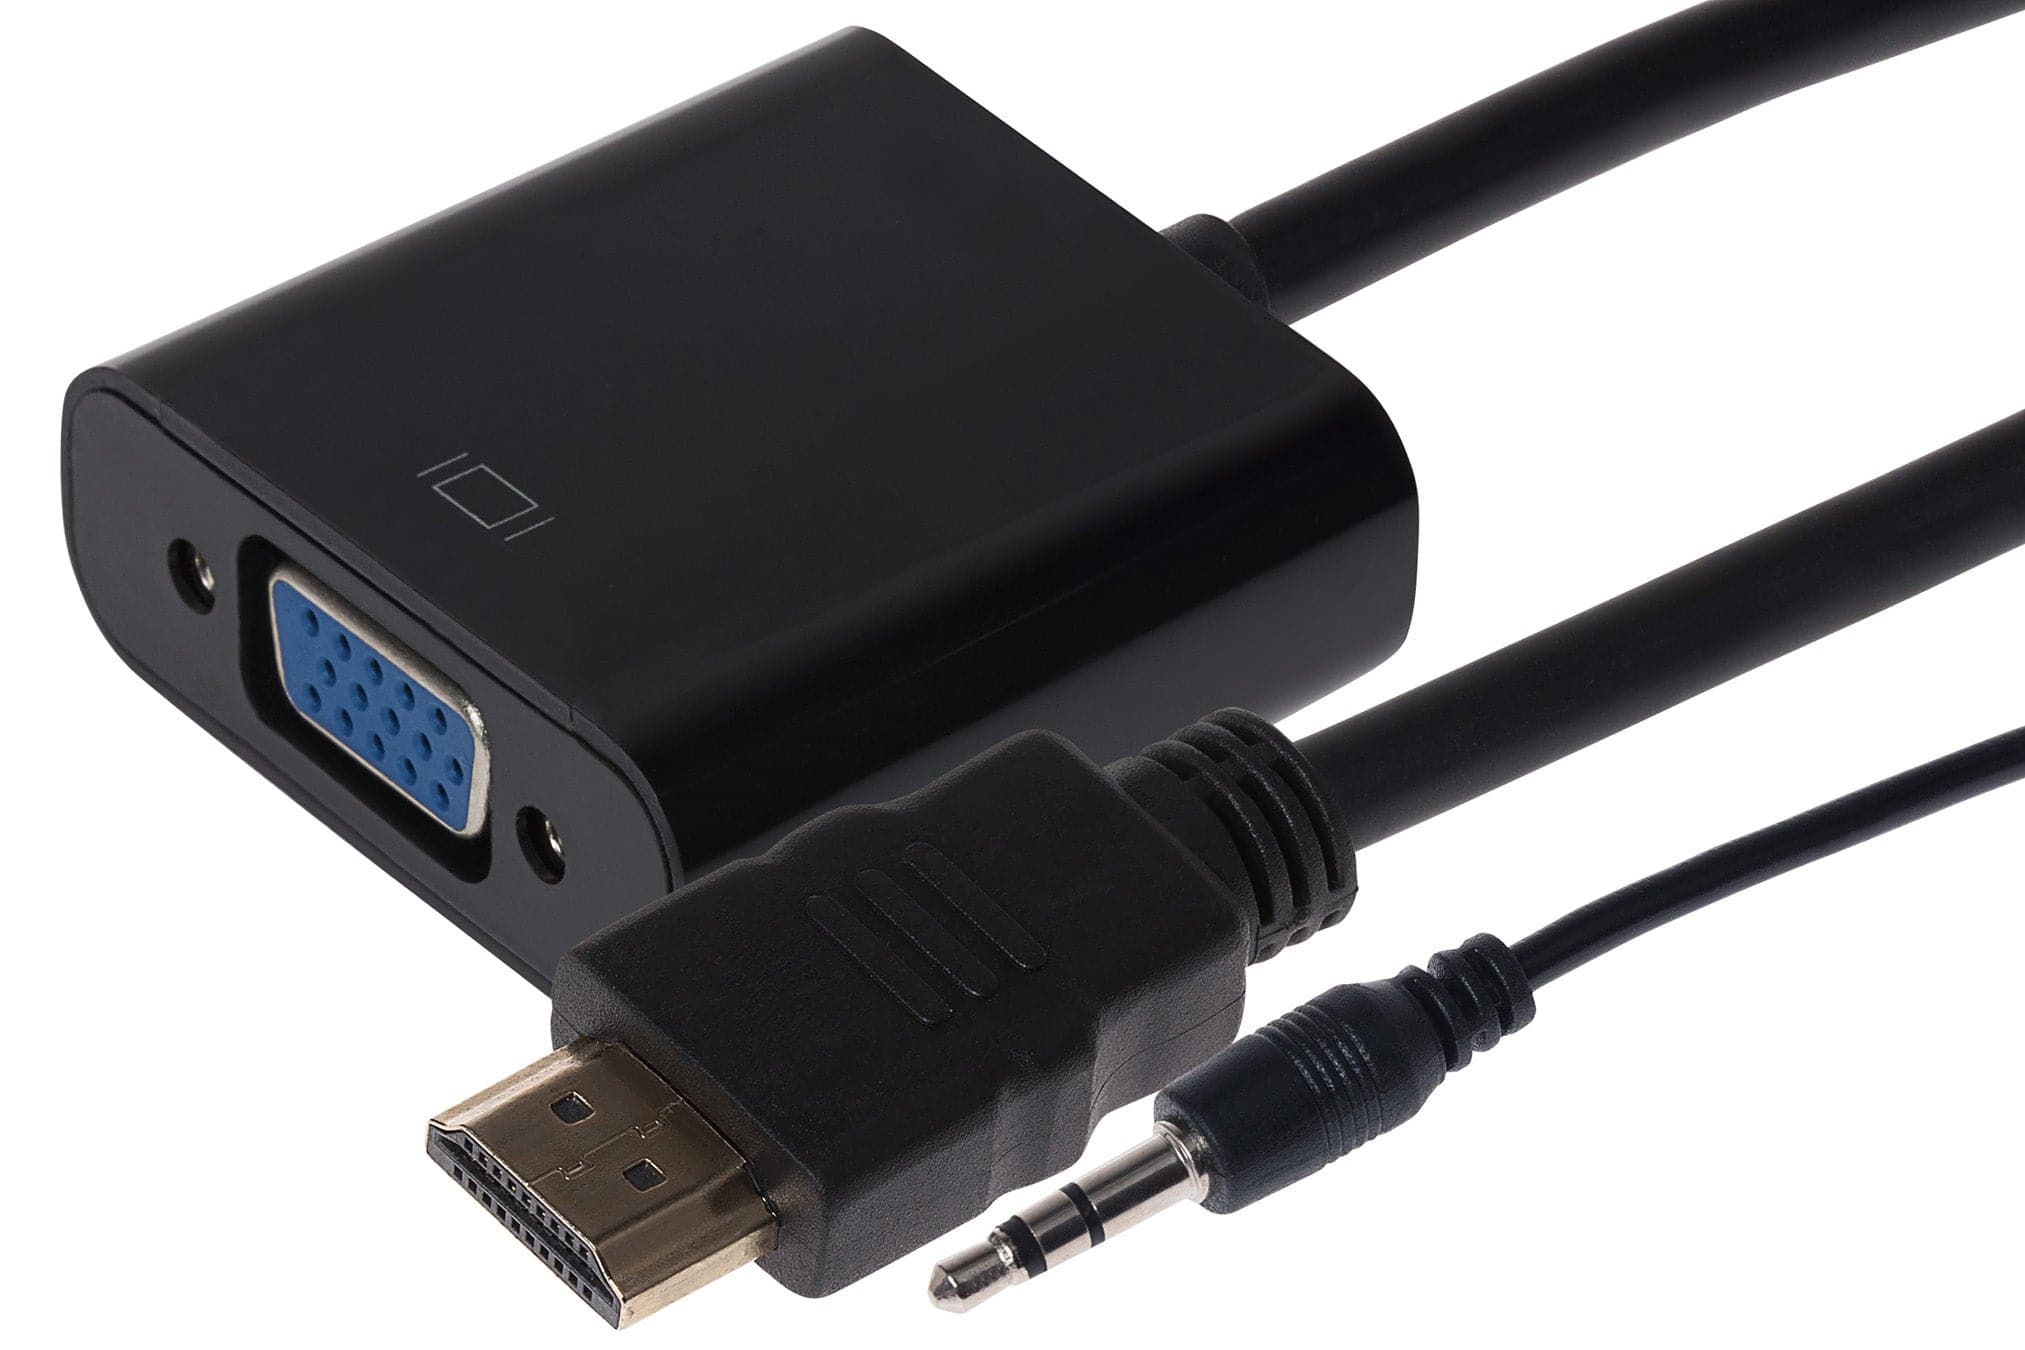 Nikkai HDMI Male to VGA Female / 3.5mm Audio Port Adapter - Black, 10cm